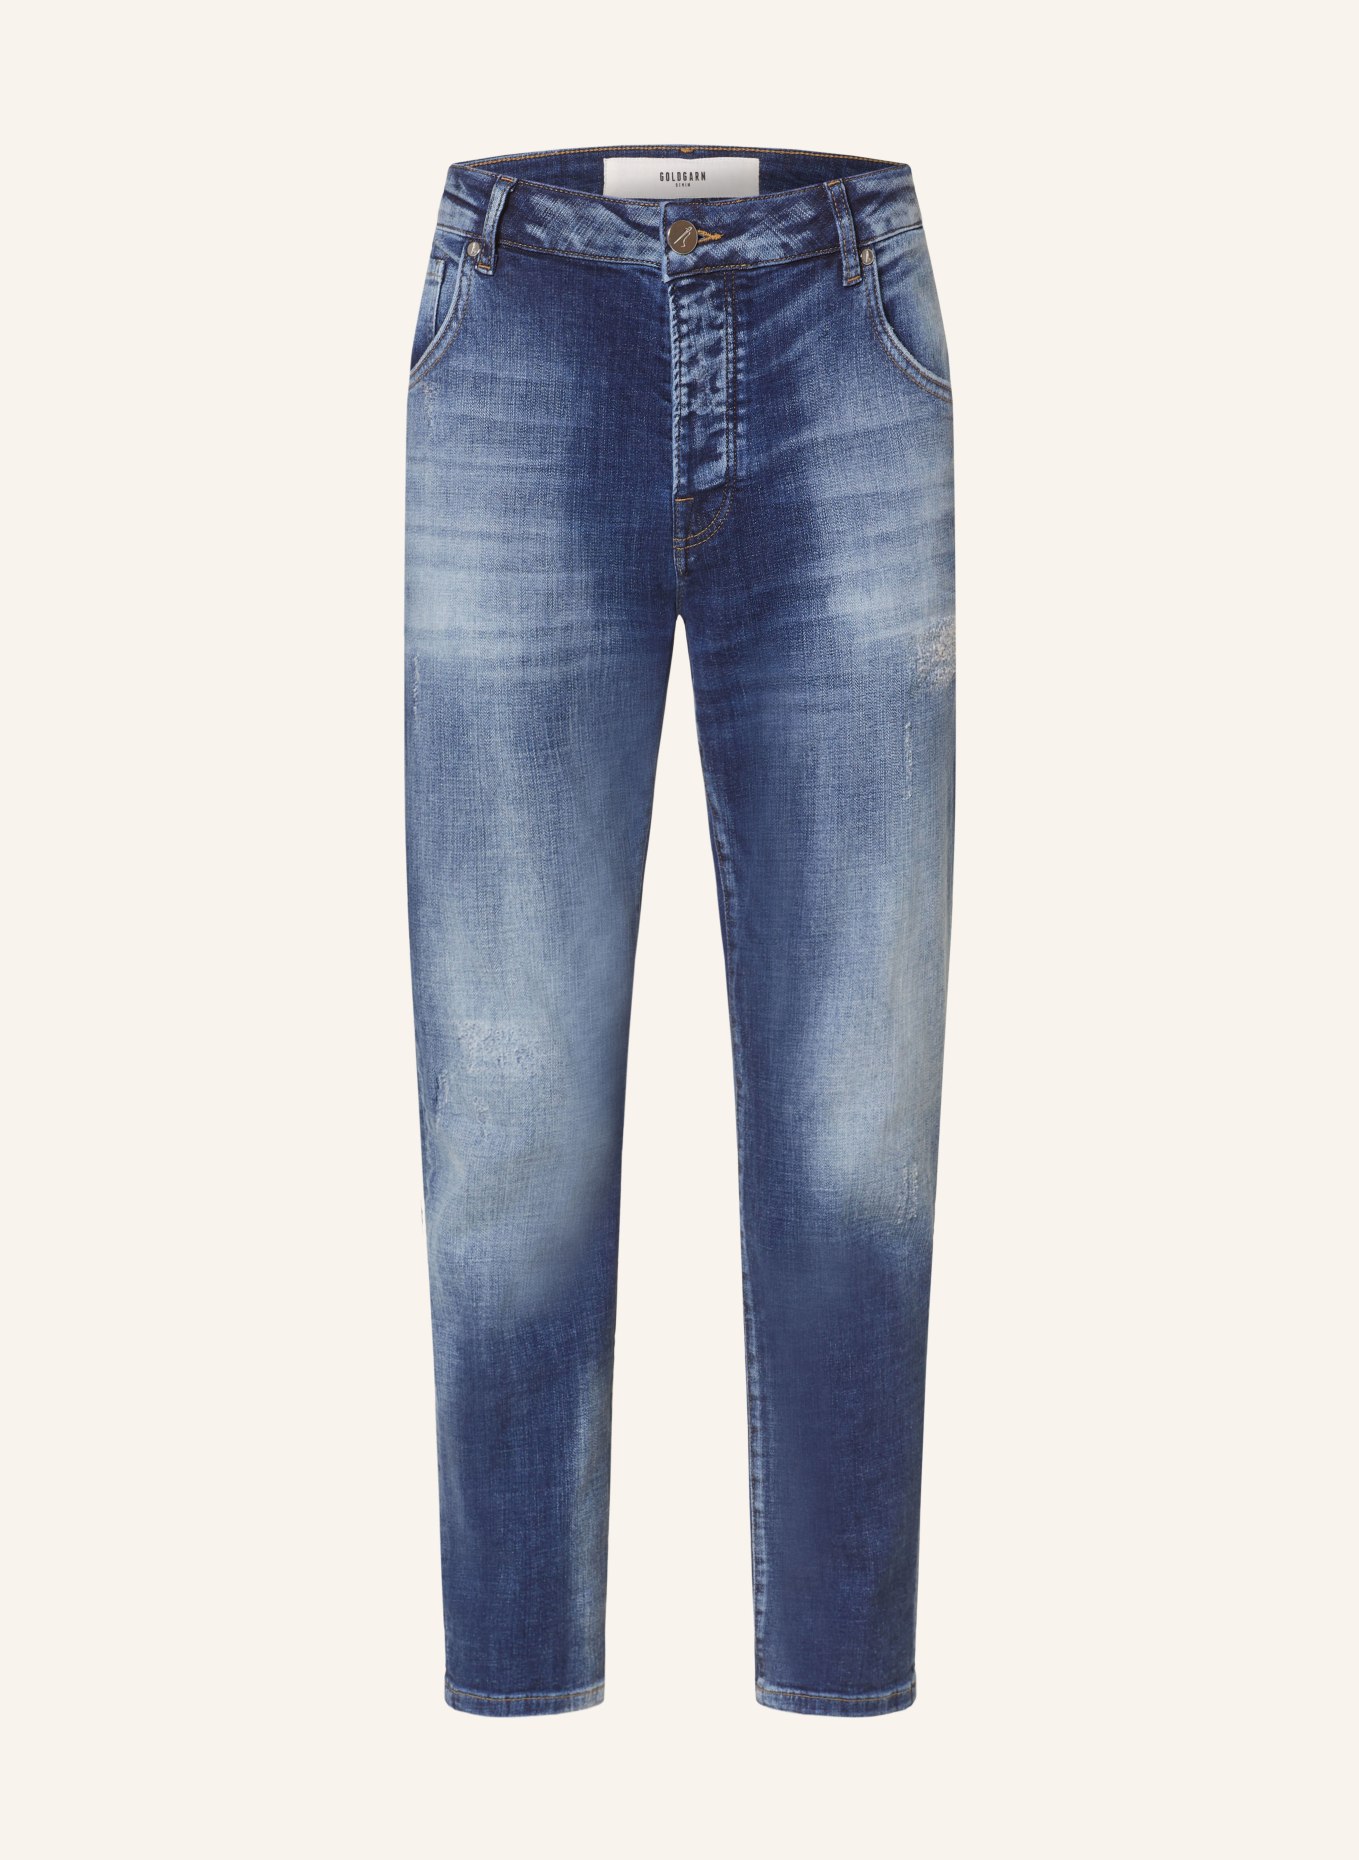 GOLDGARN DENIM Jeans NECKARAU Twisted Fit, Farbe: 1010 Vintageblue (Bild 1)